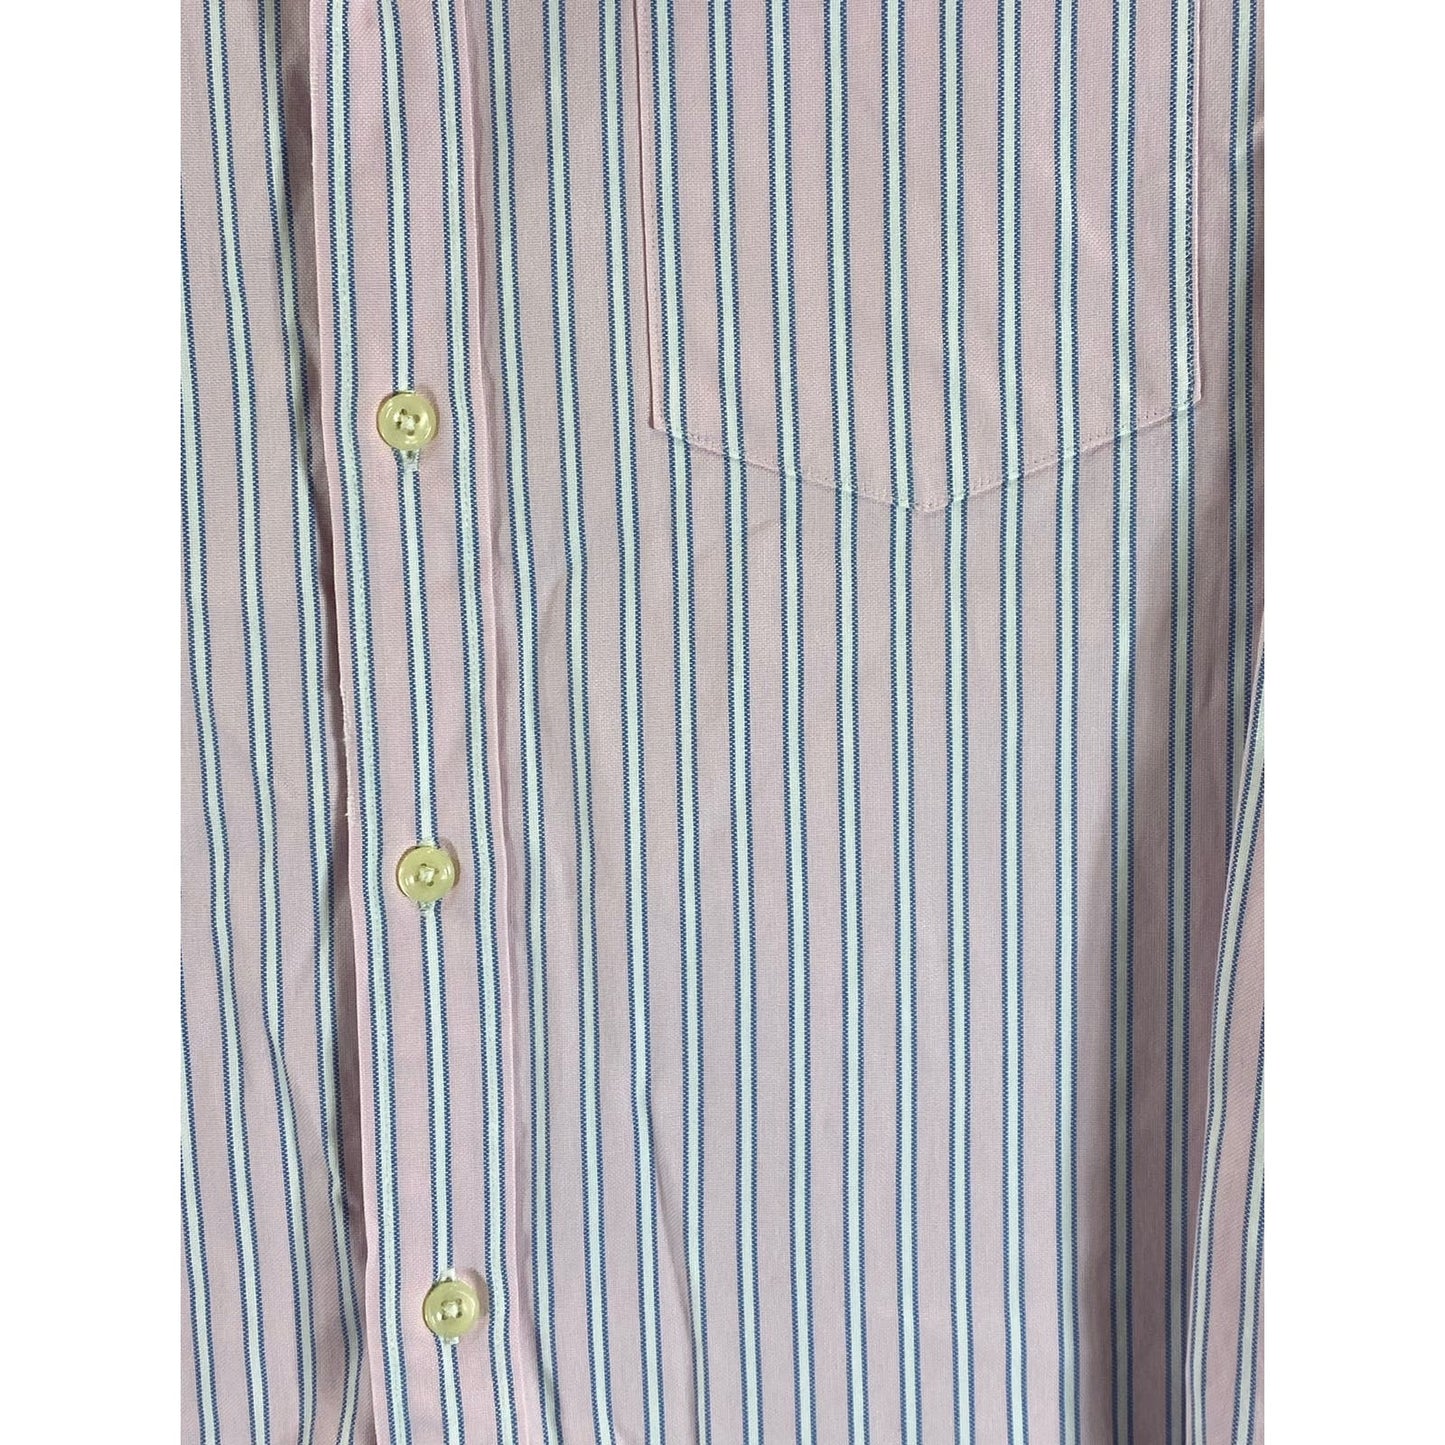 J. CREW Men's Pink/Blue Striped Vintage Oxford Button-Up Long Sleeve Shirt SZ S